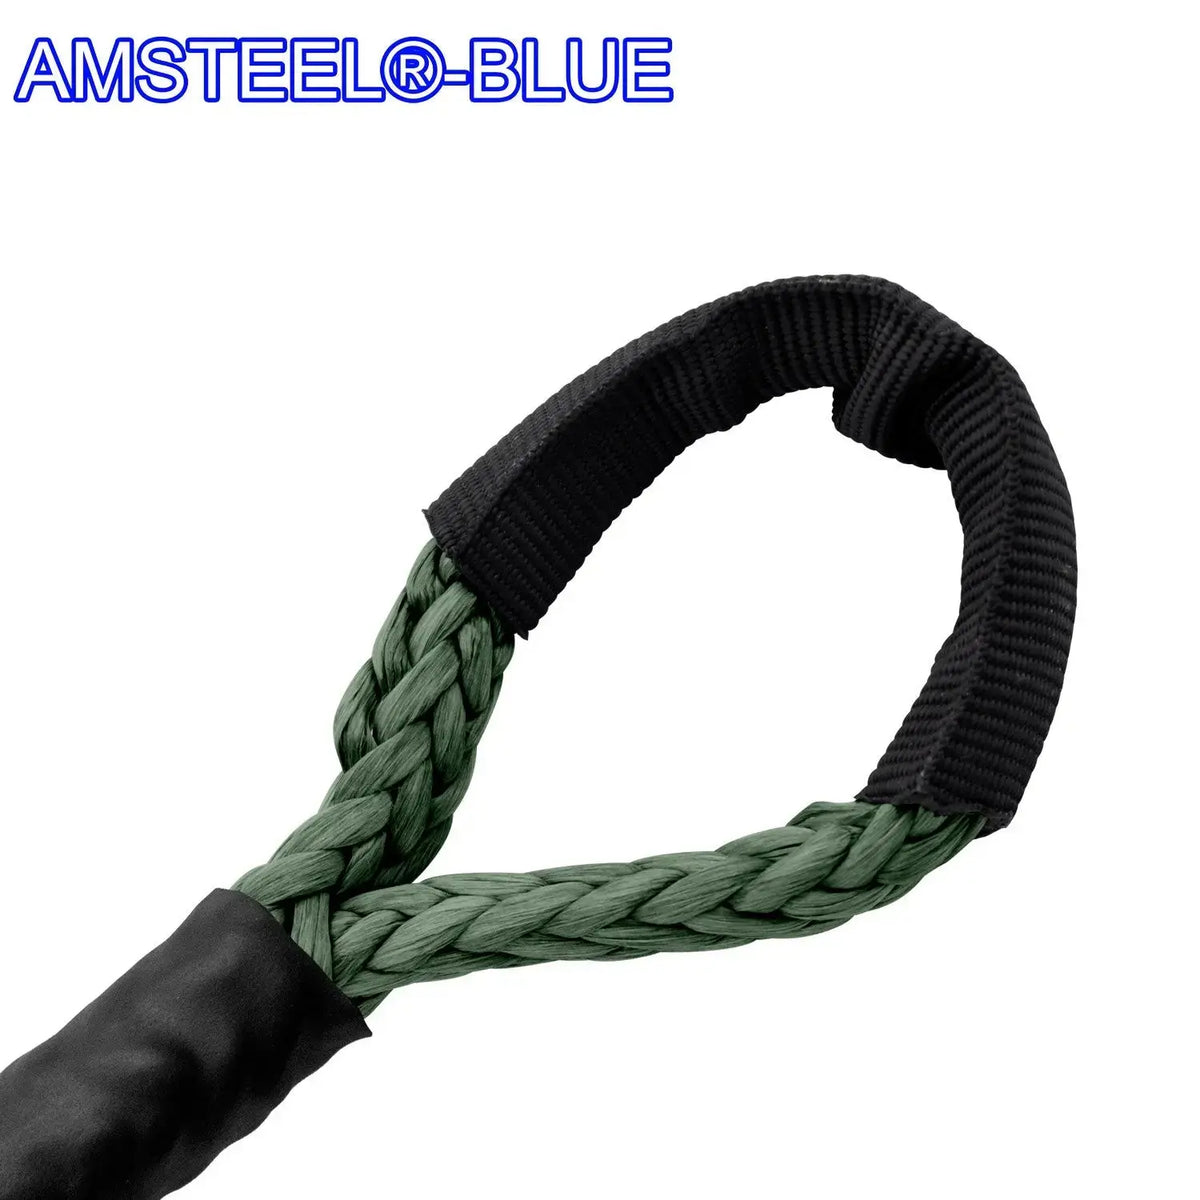 3/16" X 50' Main Line Winch Rope - AmSteel Blue OD-Green-Soft-Eye Custom Splice